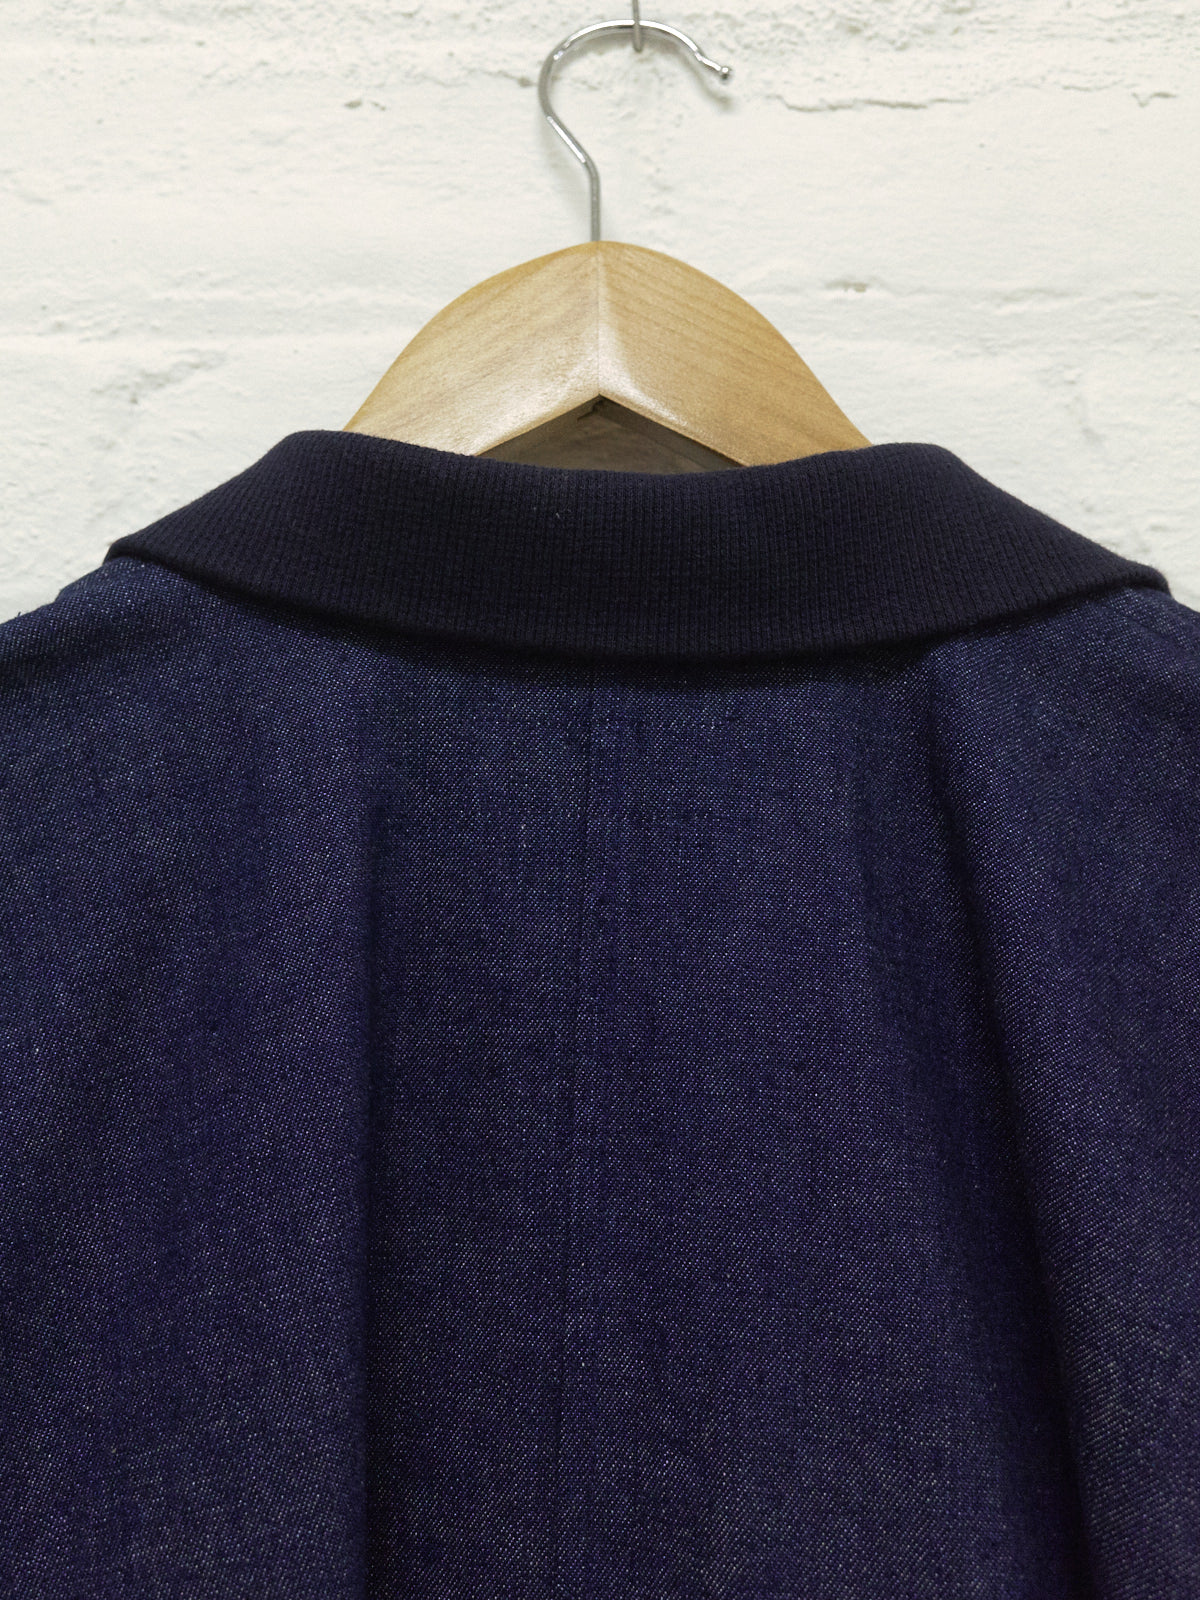 Yohji Yamamoto 1980s indigo denim dolman sleeve double pocket coat - womens M